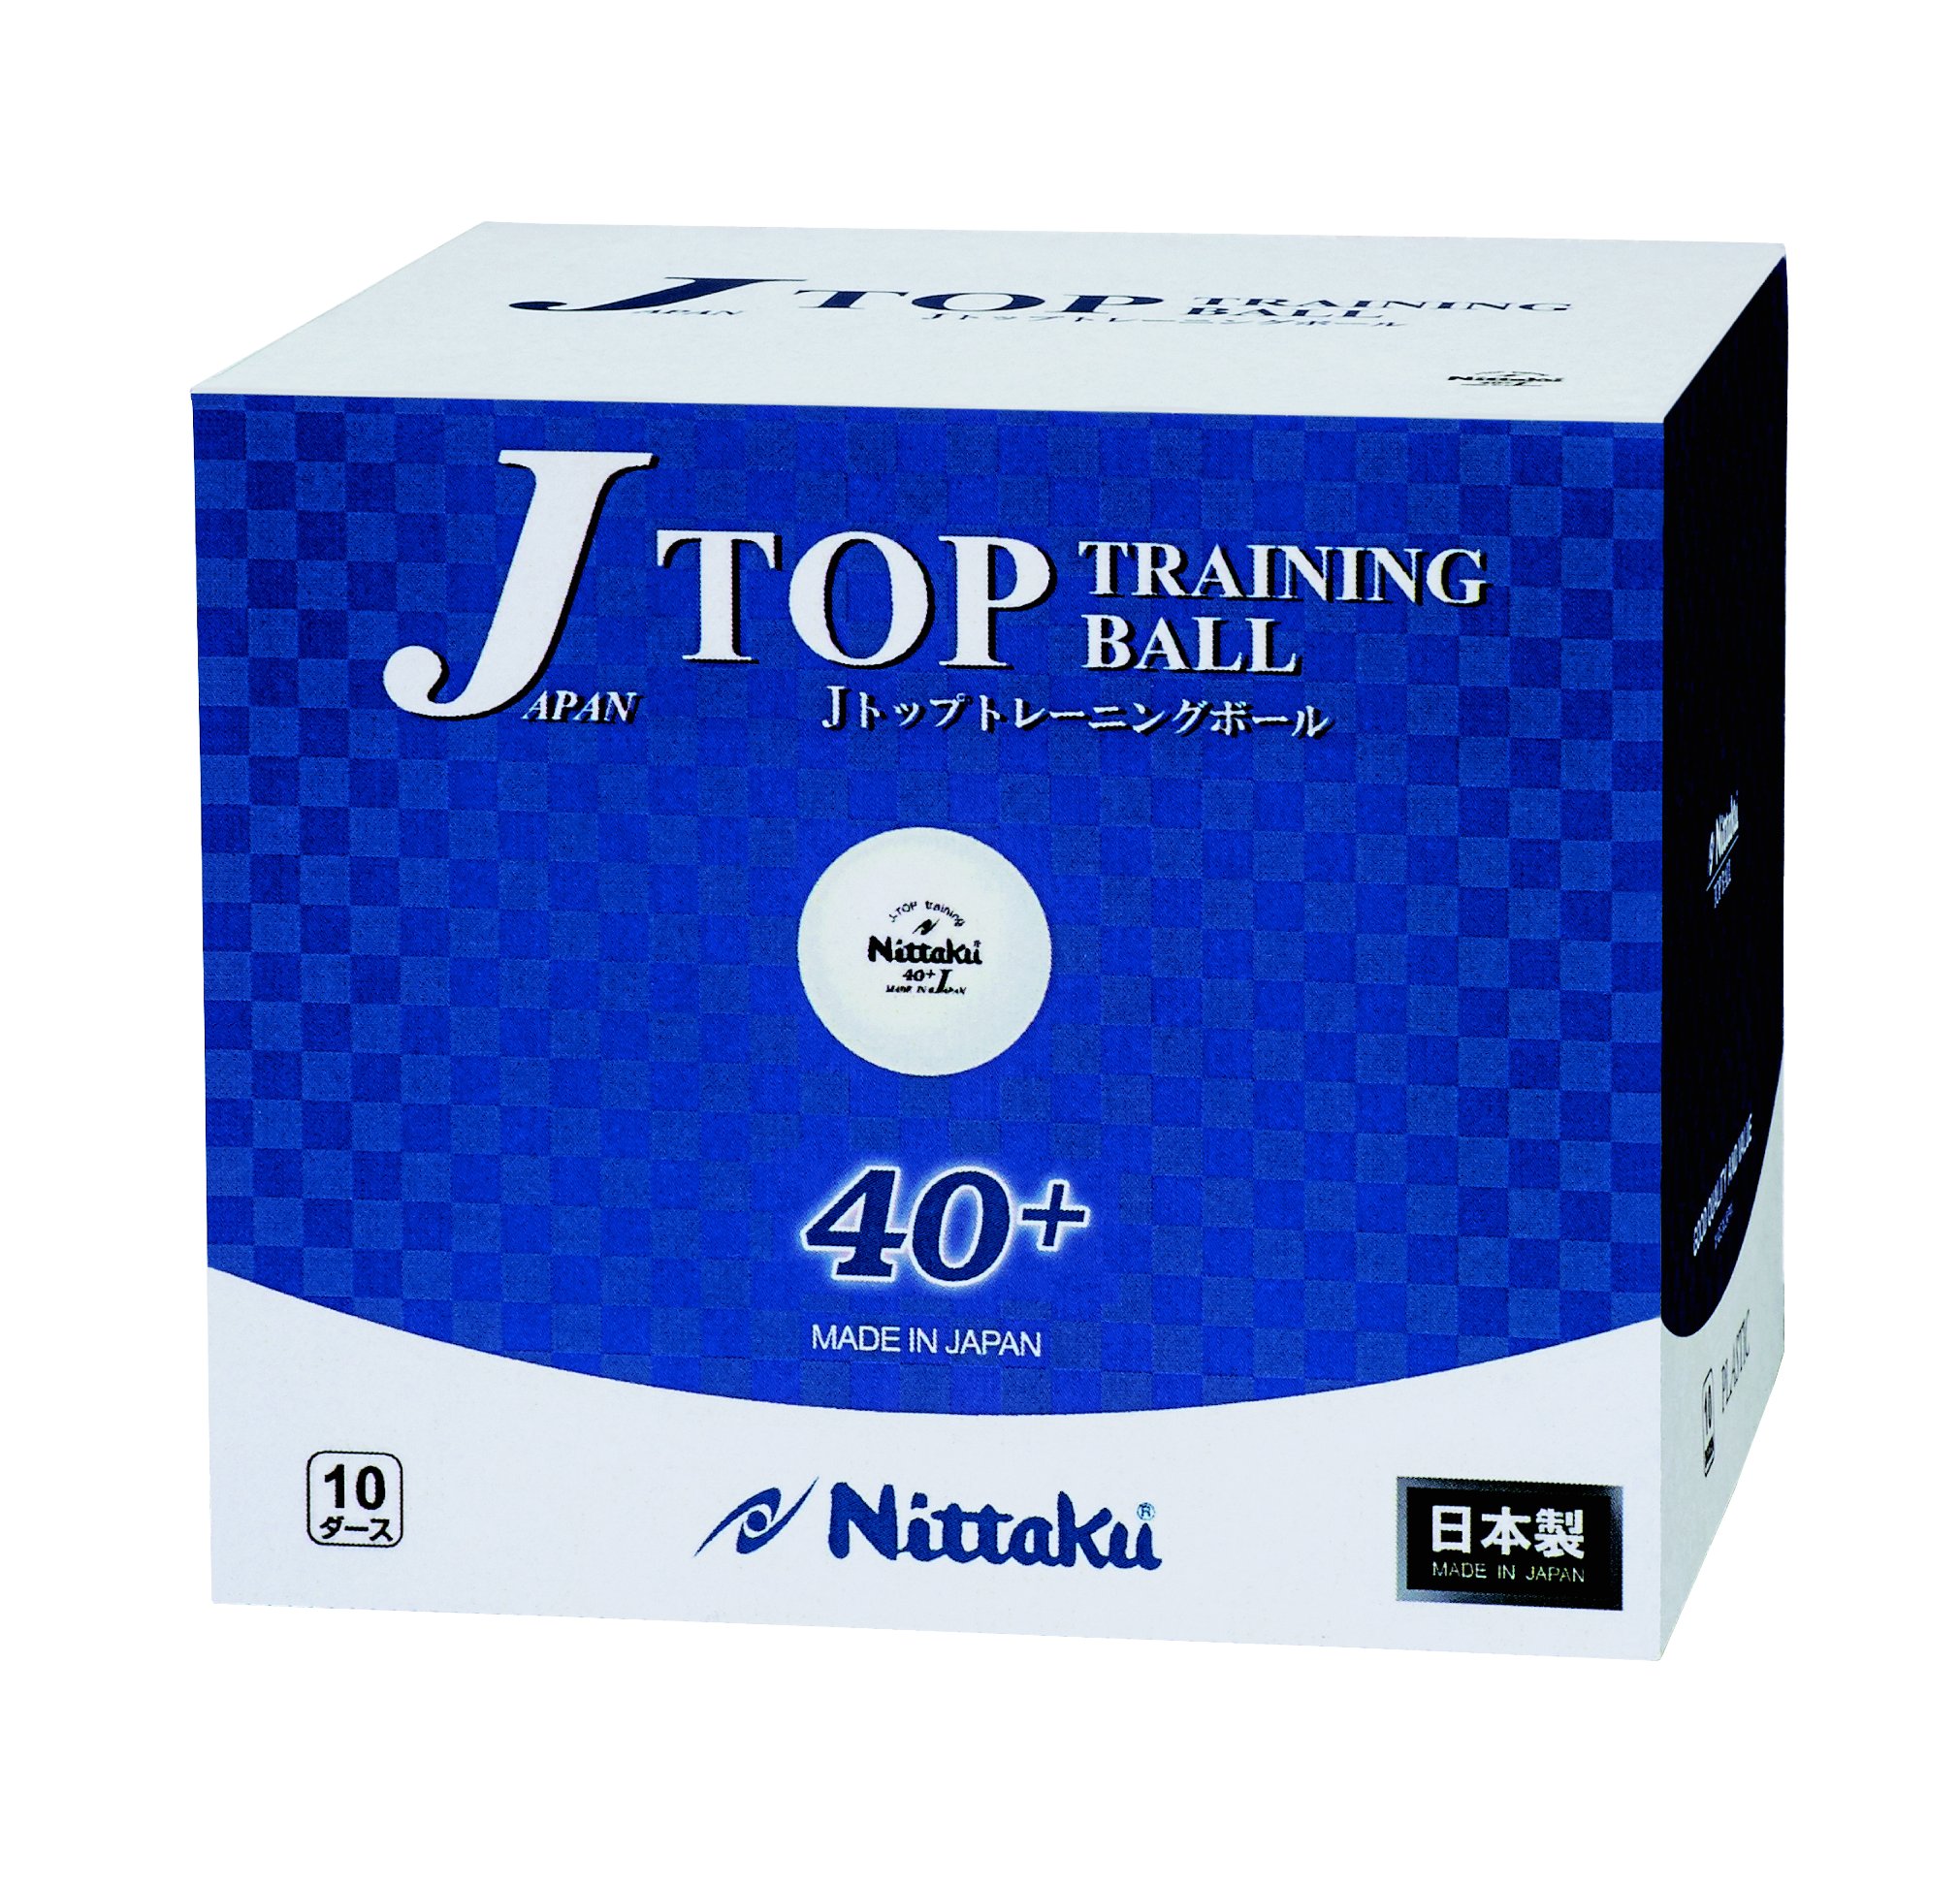 NITTAKU J-Top Trainingsball 40+